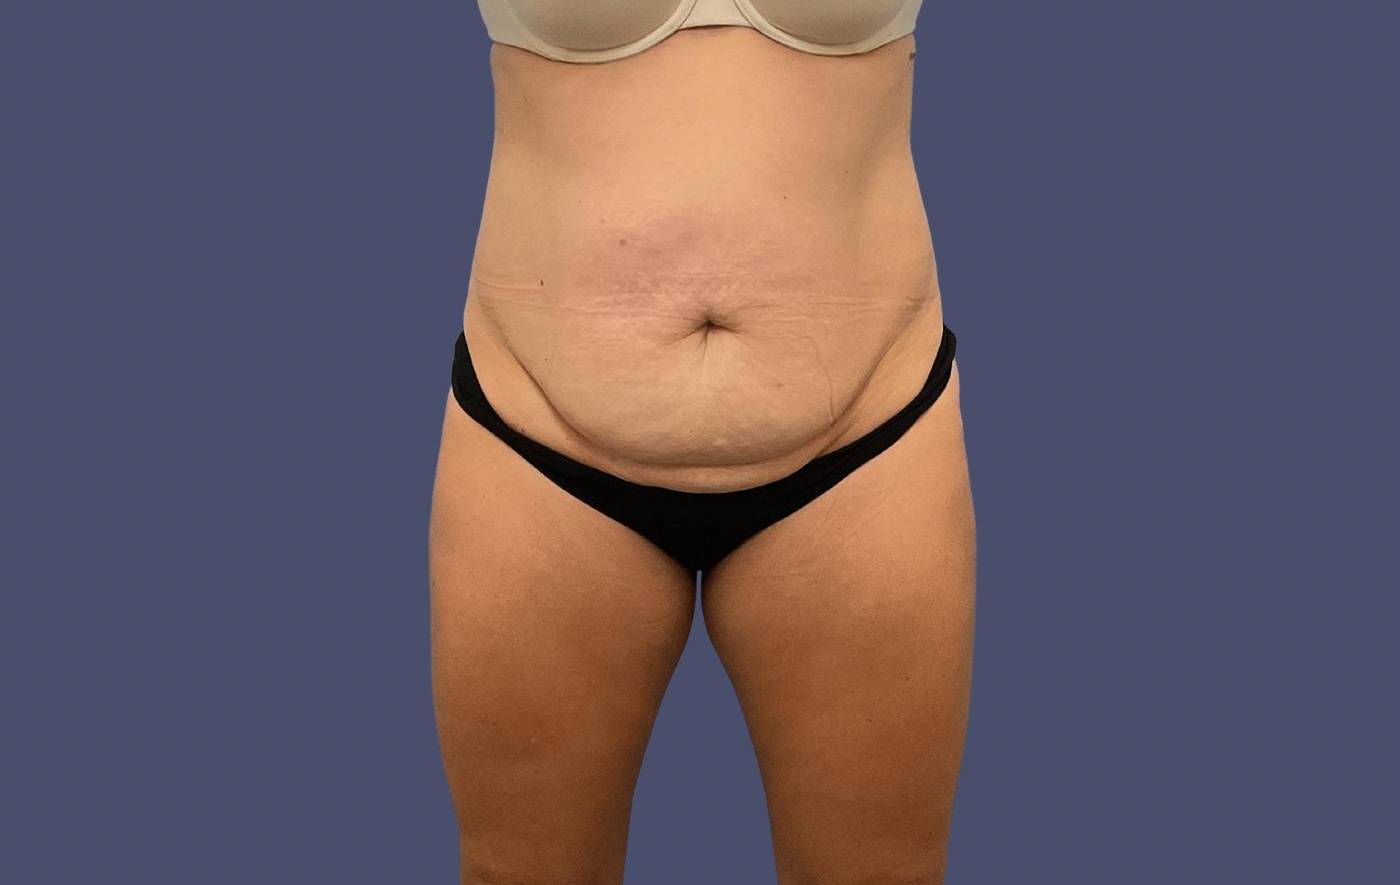 Abdominoplasty (Tummy Tuck) 20 Before